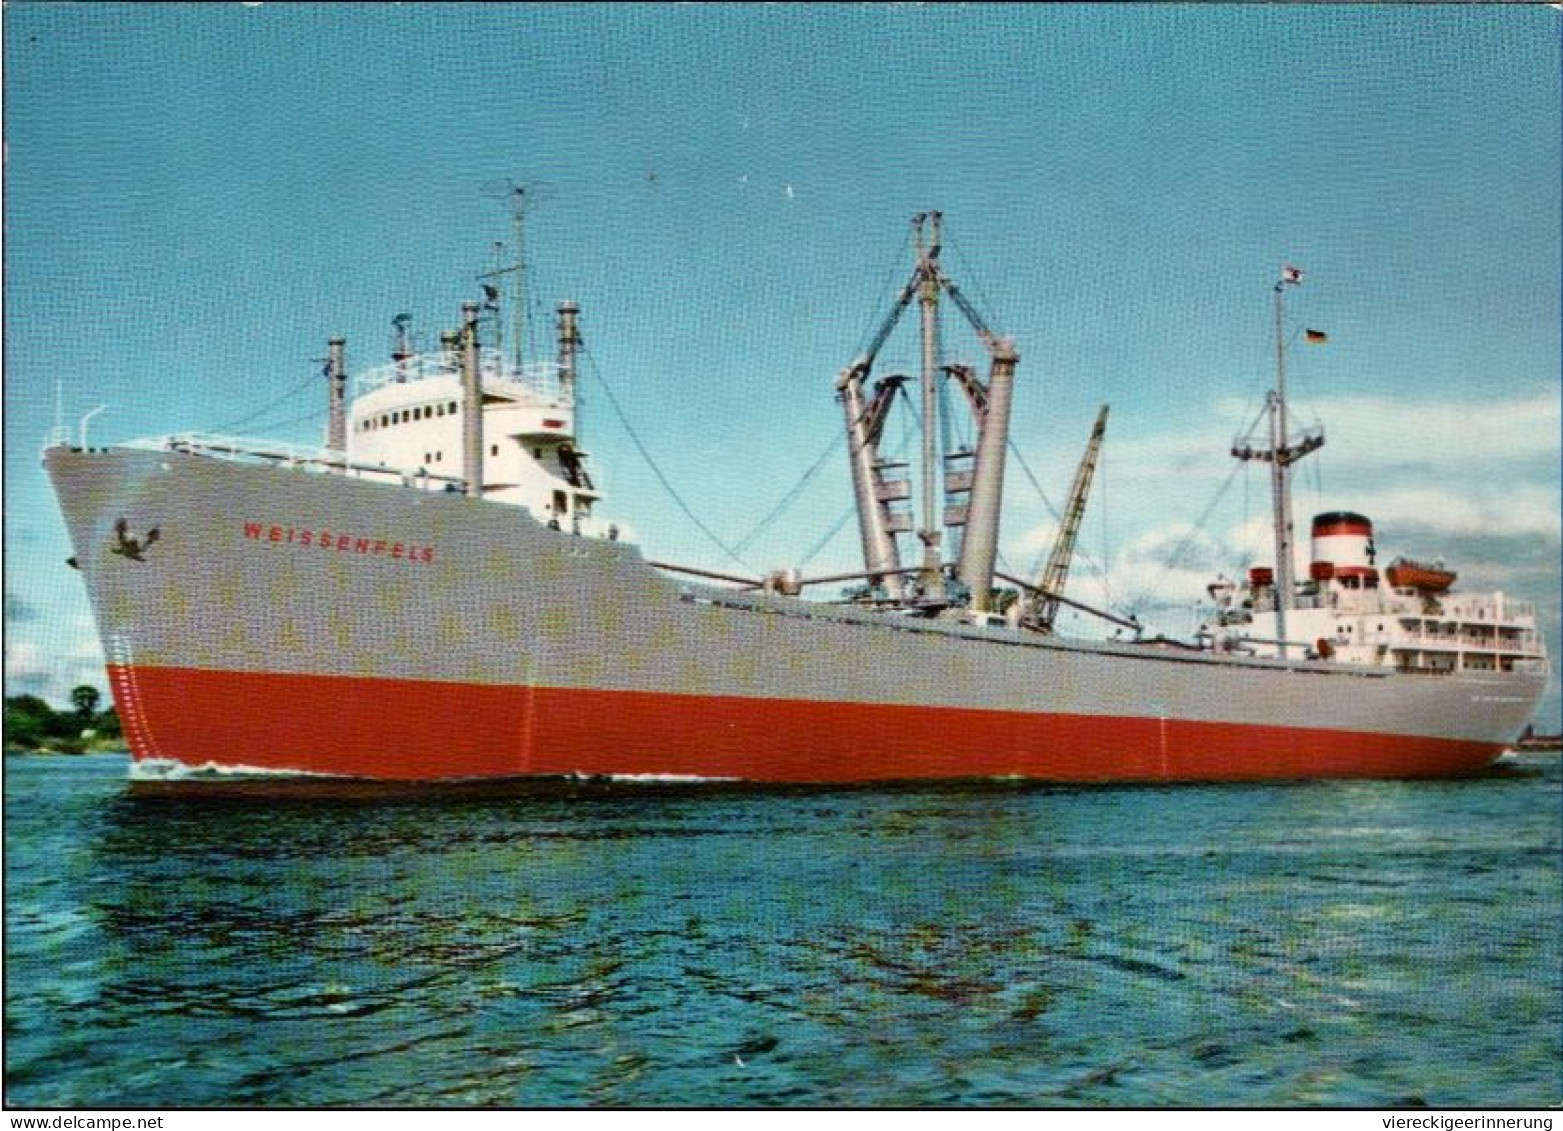 ! Ansichtskarte Ship, DDSG Hansa Bremen, Schiff MS Weissenfels, Frachter - Commercio